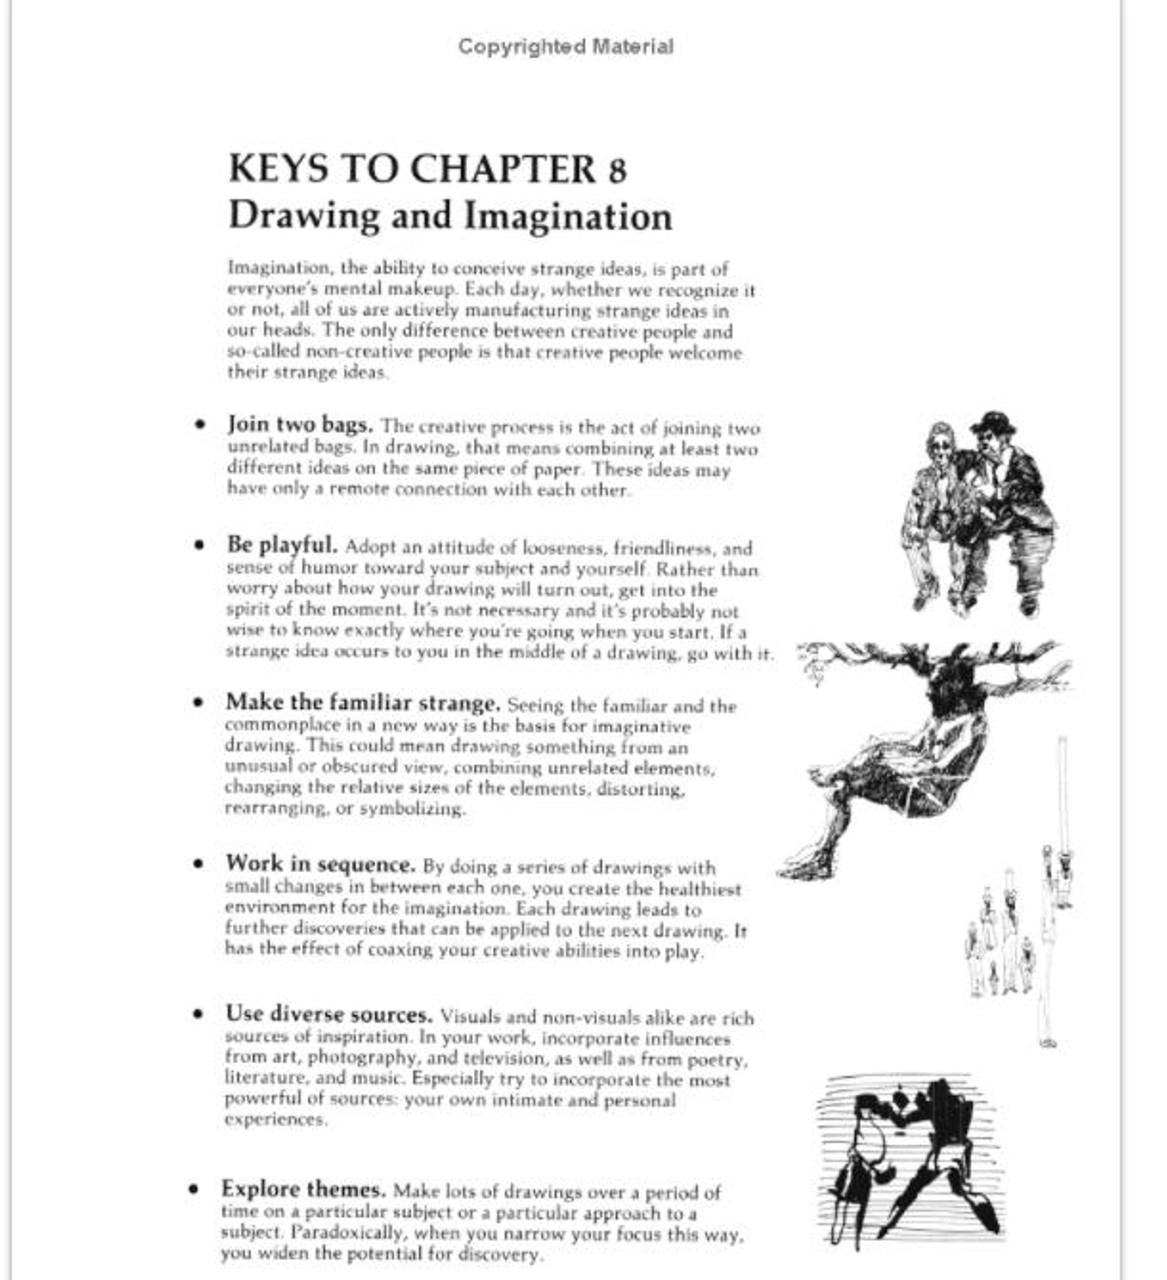 Keys to Drawing by Bert Dodson - Sam Flax Atlanta